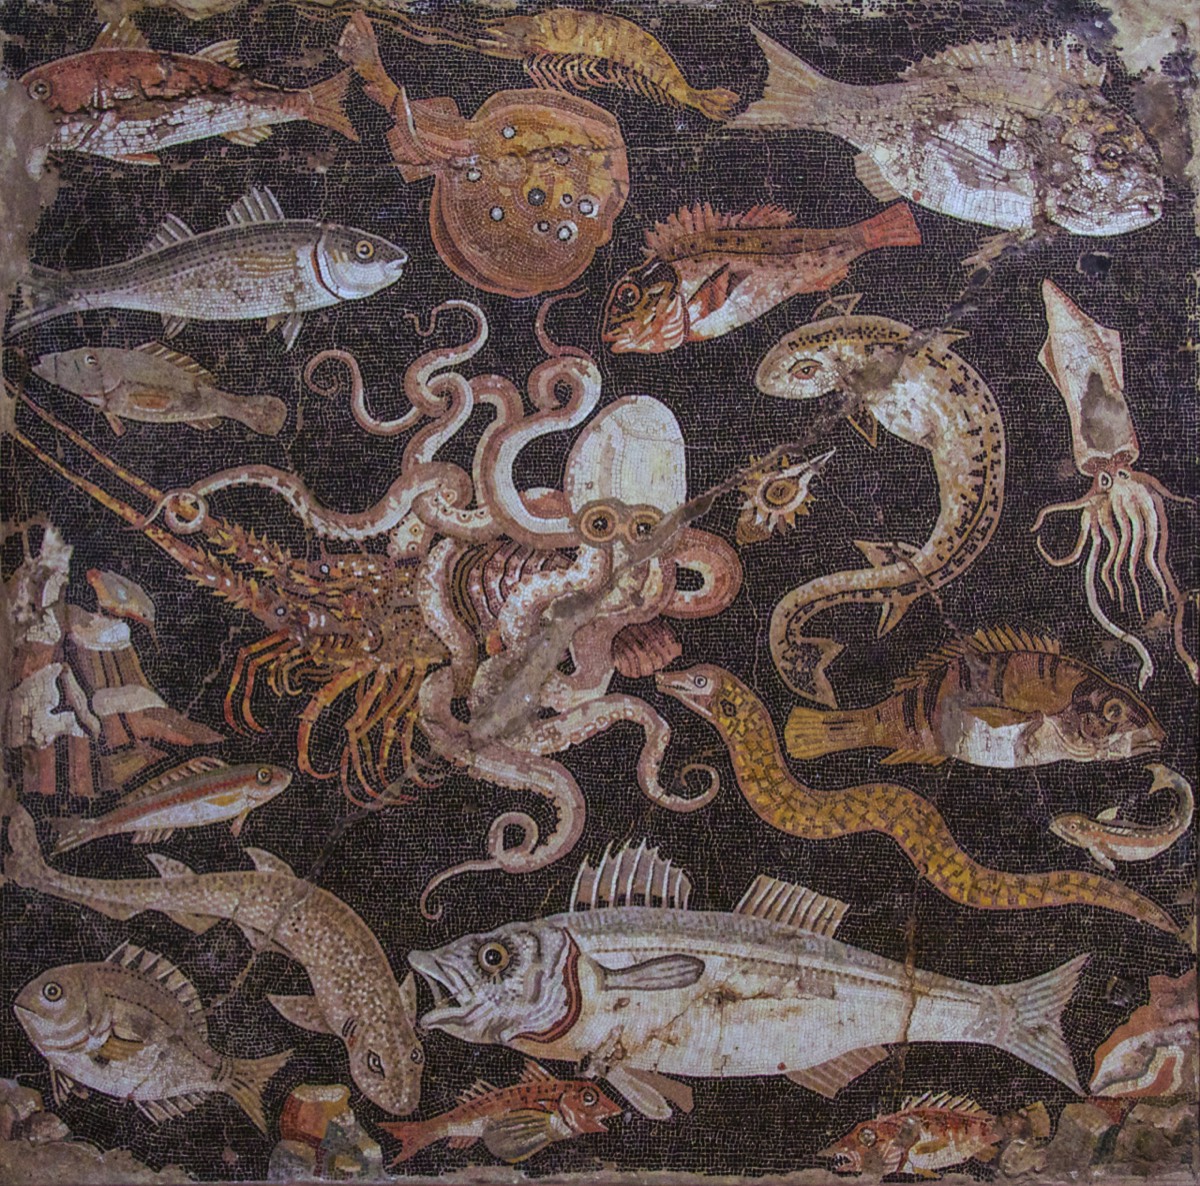 Museum of Naples - Marine fauna mosaic